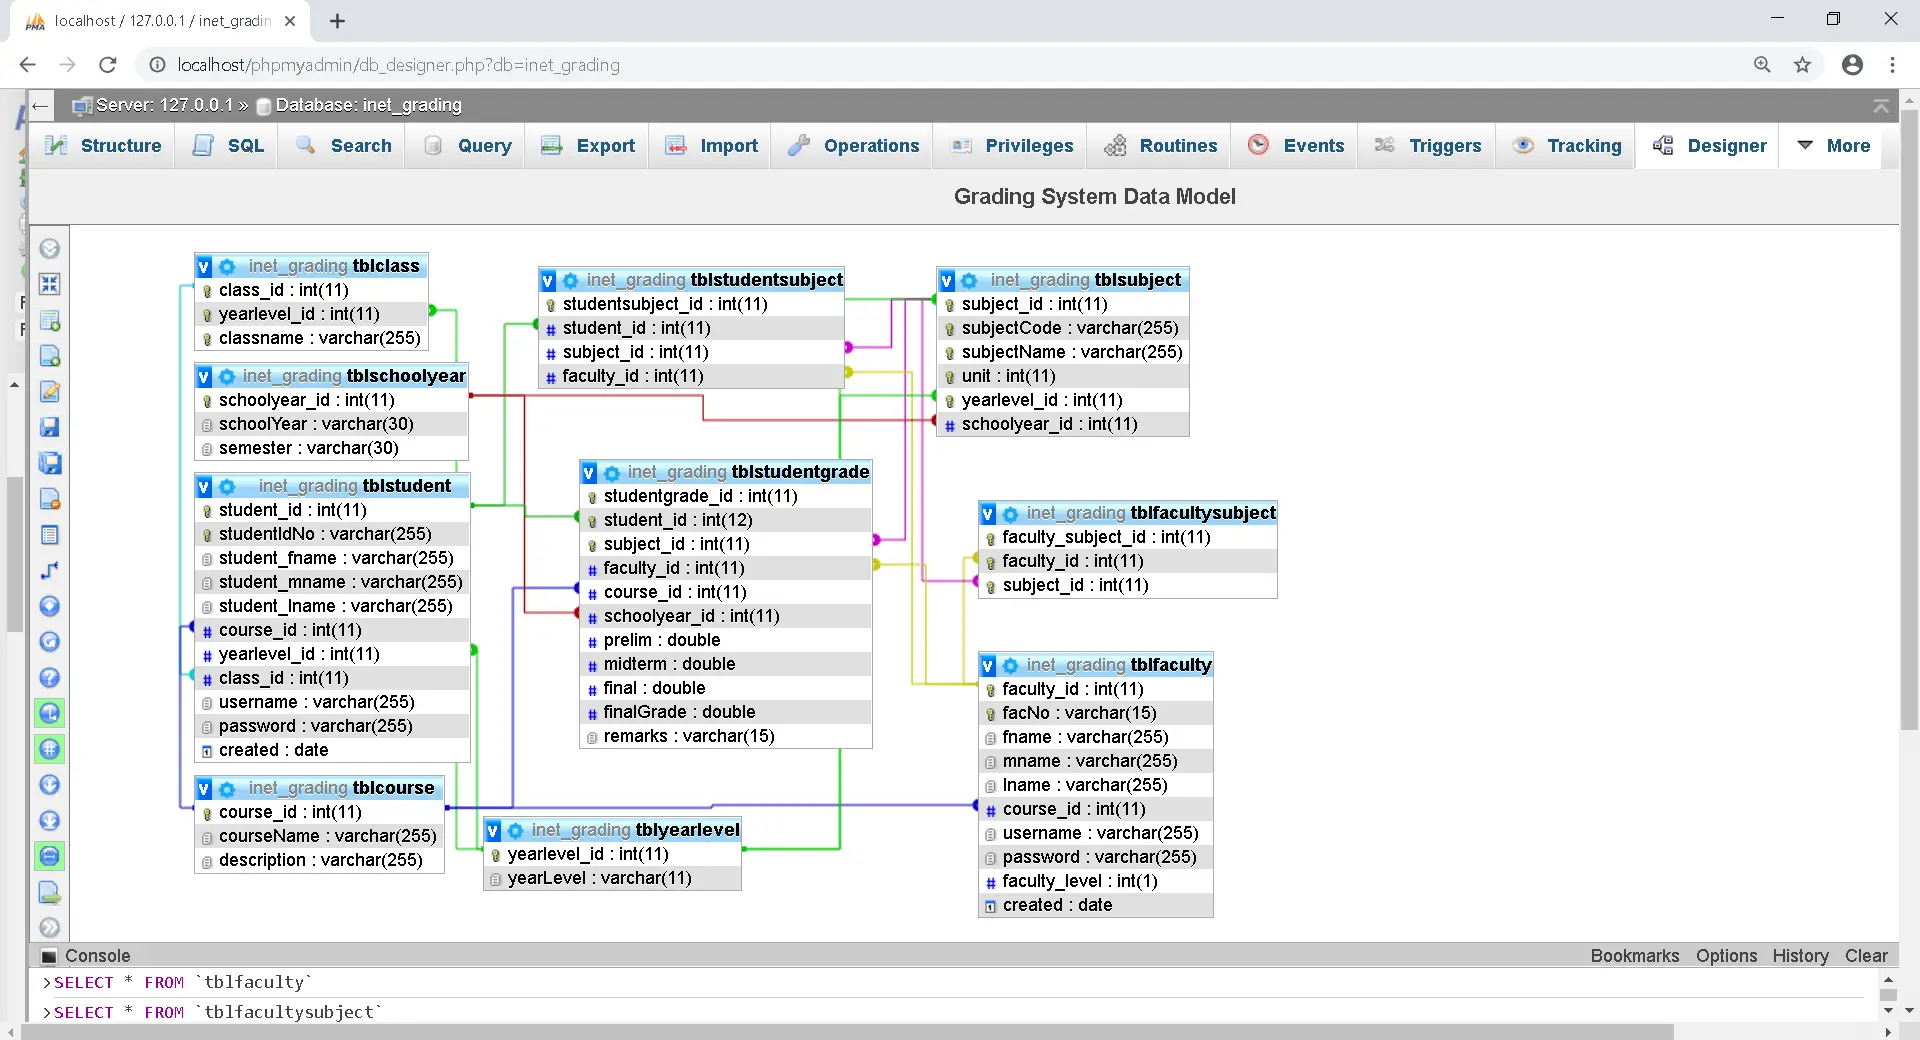 Grading System Database Model and Design